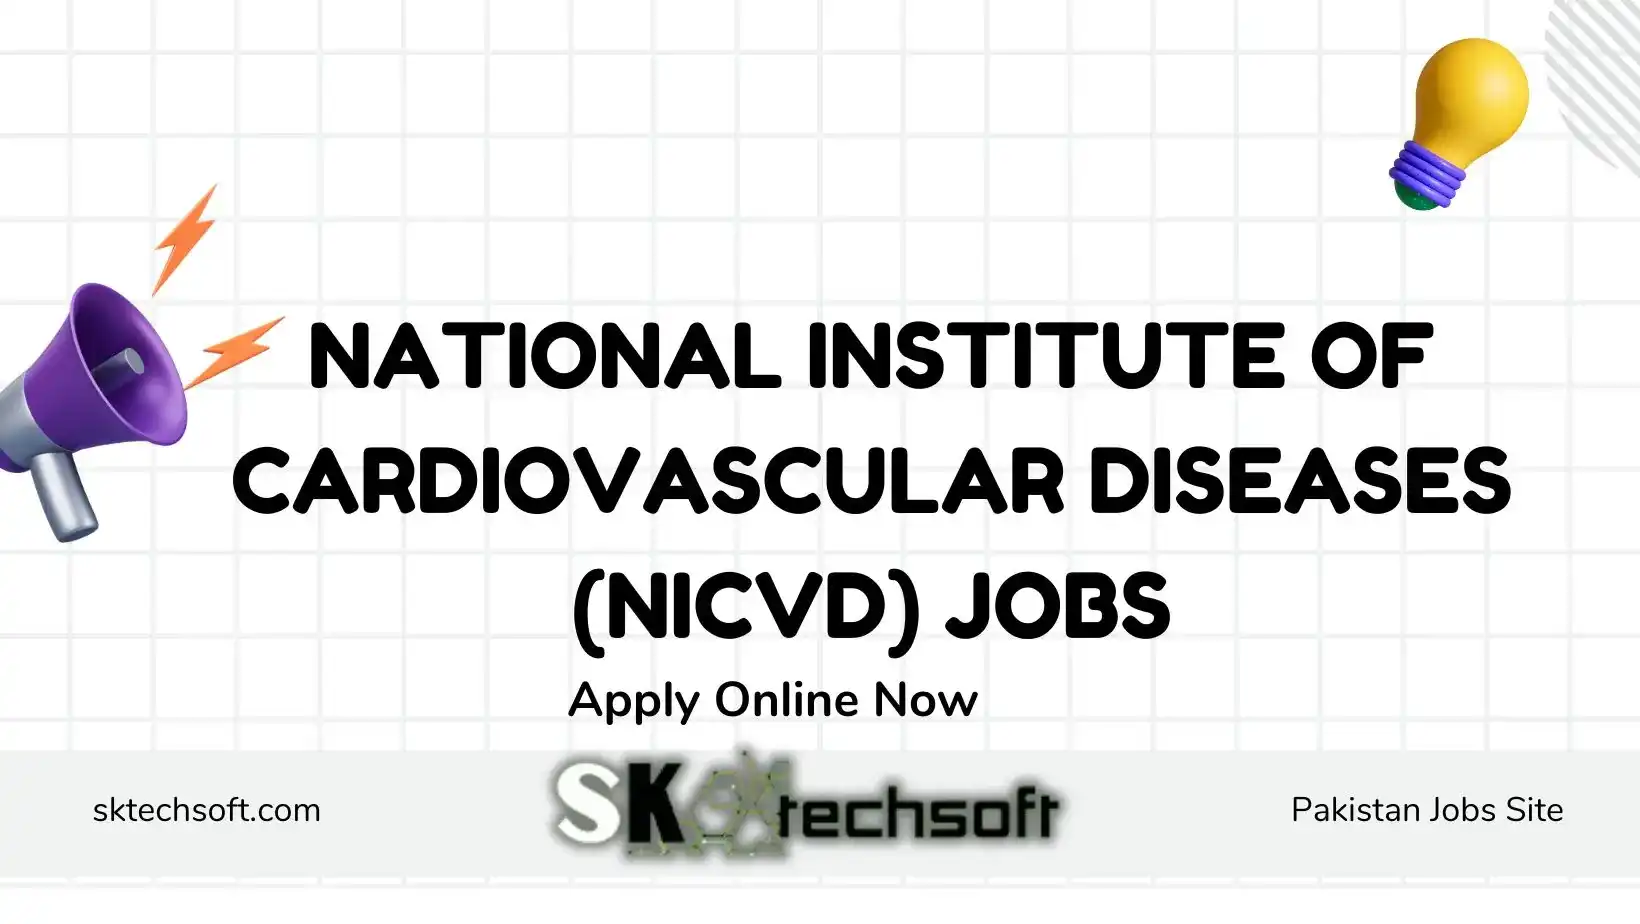 NATIONAL INSTITUTE OF CARDIOVASCULAR DISEASES (NICVD) JOBS